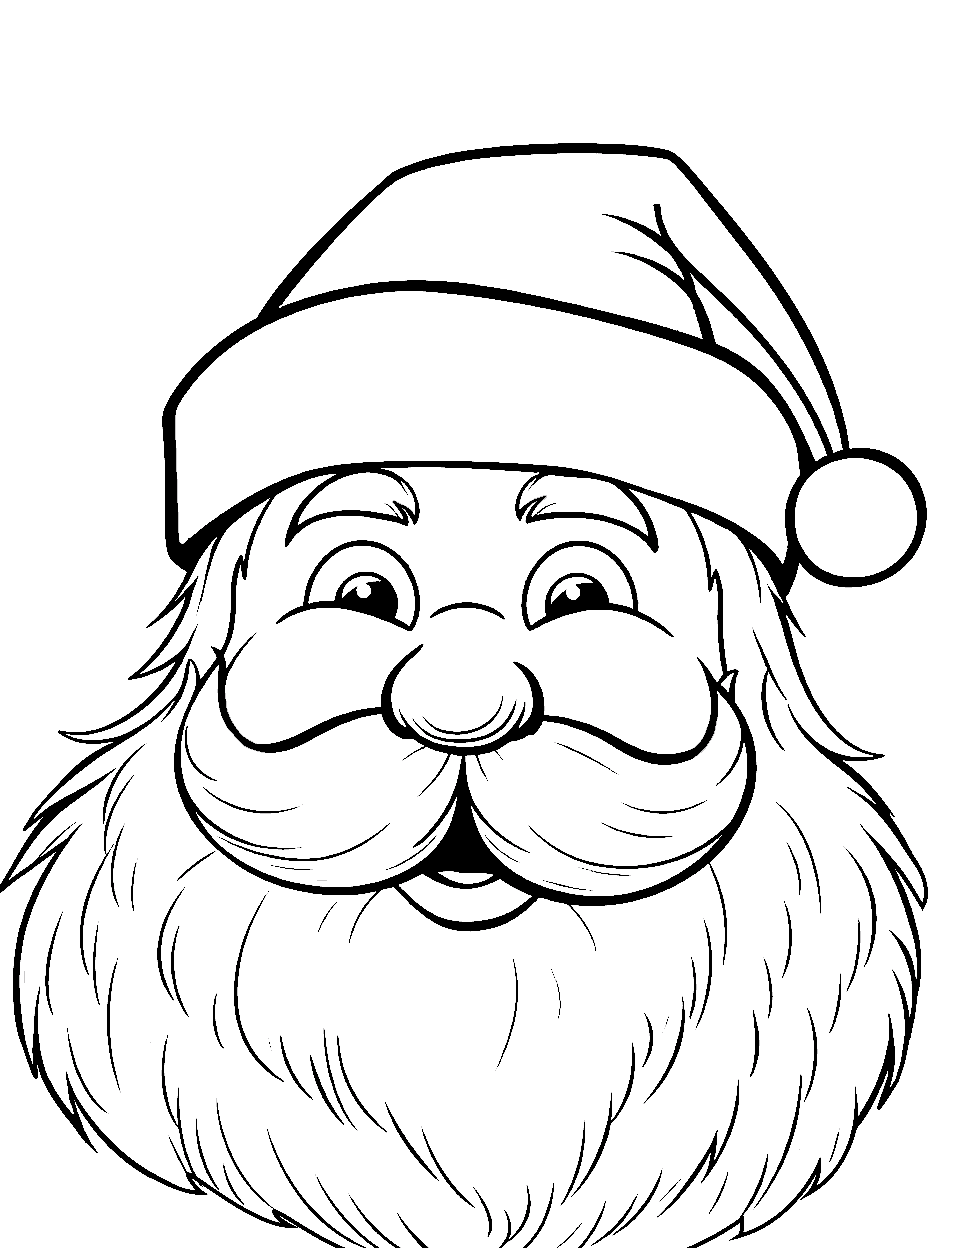 Santa's Face Close-Up Coloring Page - A close-up of Santa’s face, highlighting his jolly expression and twinkling eyes.